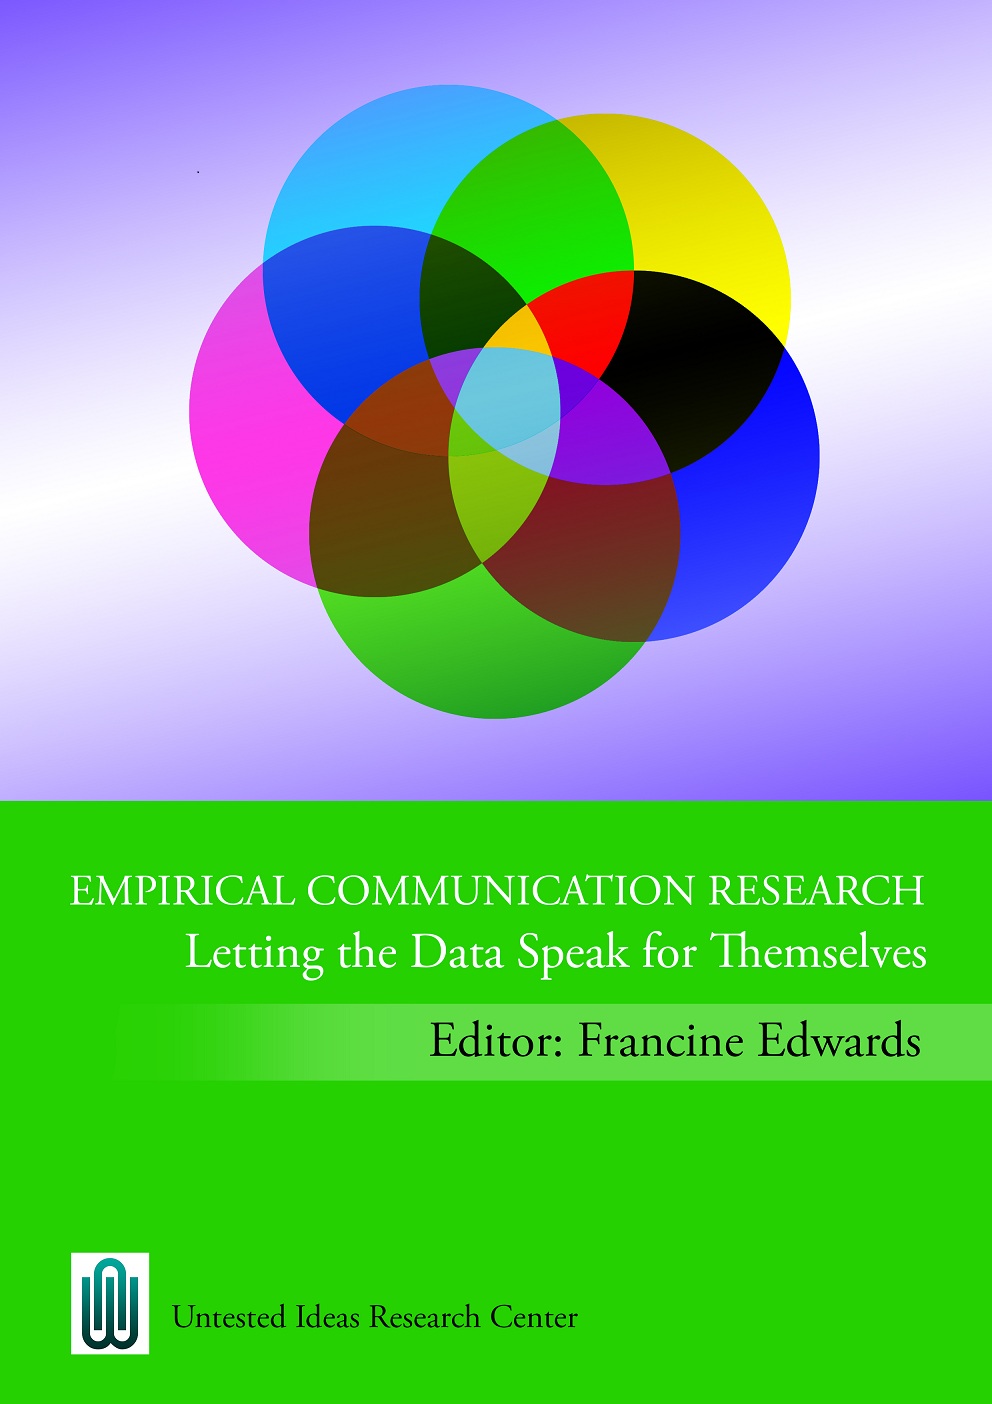 communication research ideas